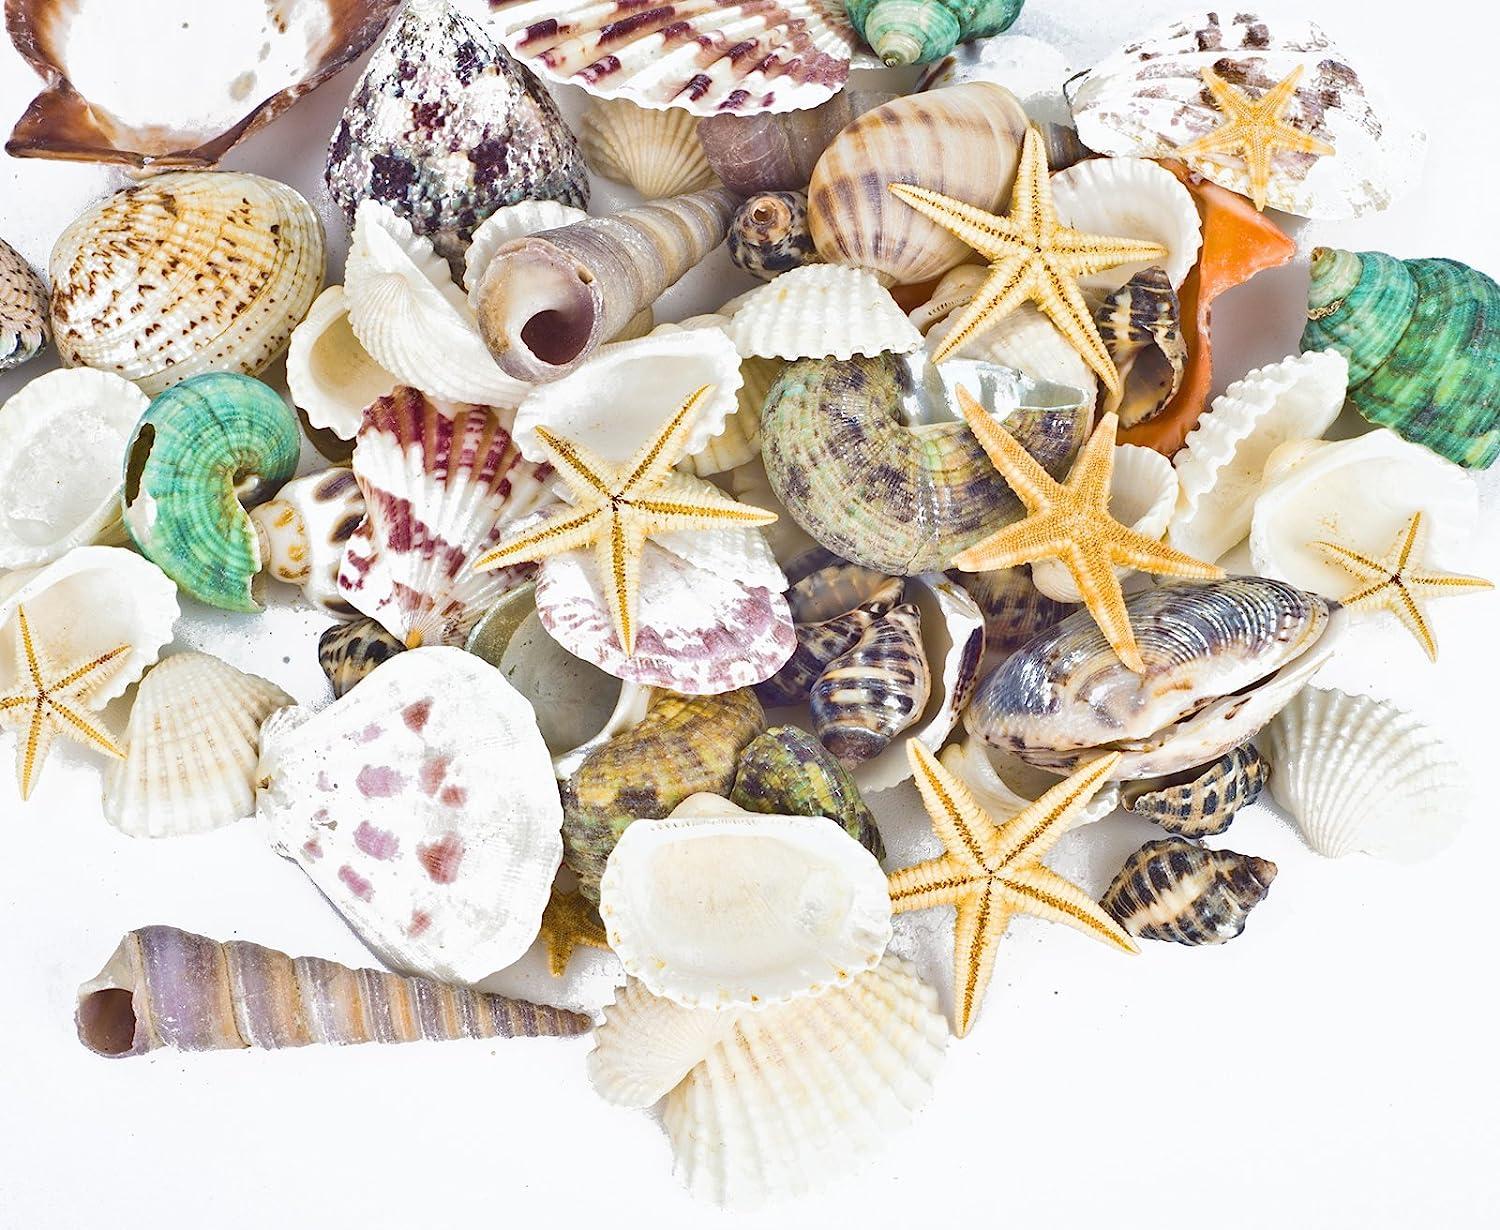 WFPLUS 200+pcs Sea Shells Mixed Ocean Beach Seashells, Various Sizes  Natural Seashells Starfish for Fish Tank, Home Decorations, Beach Theme  Party